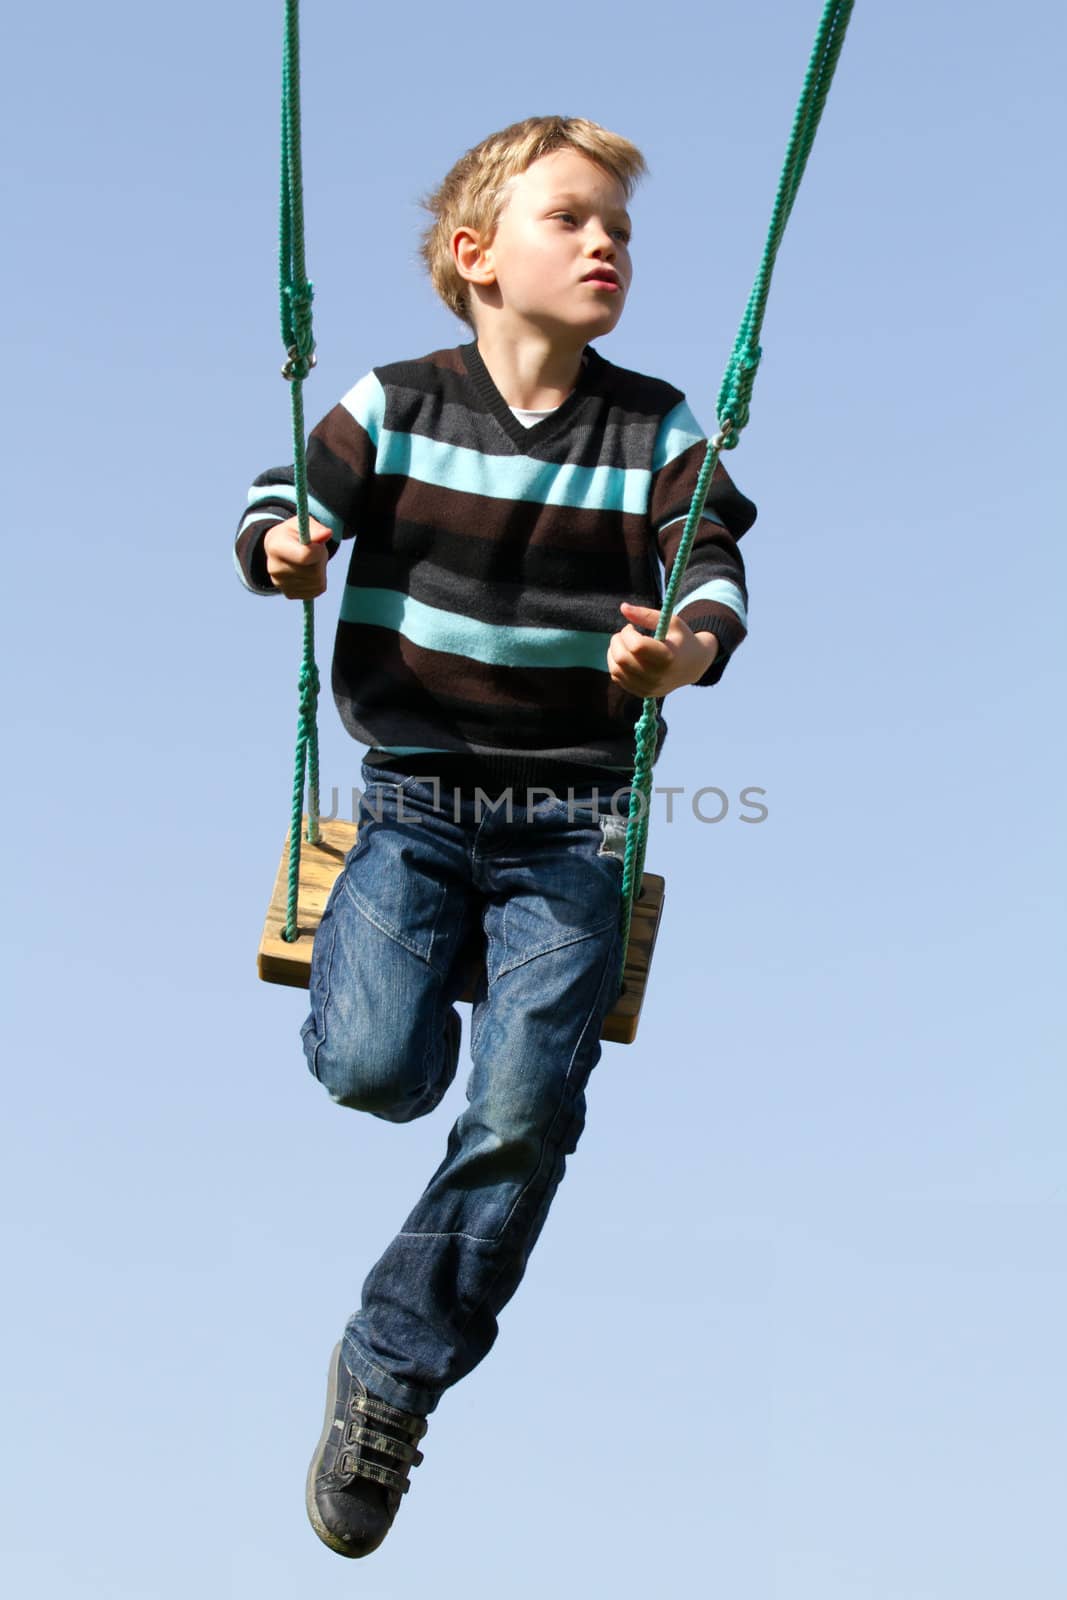 child on a swing by chrisroll